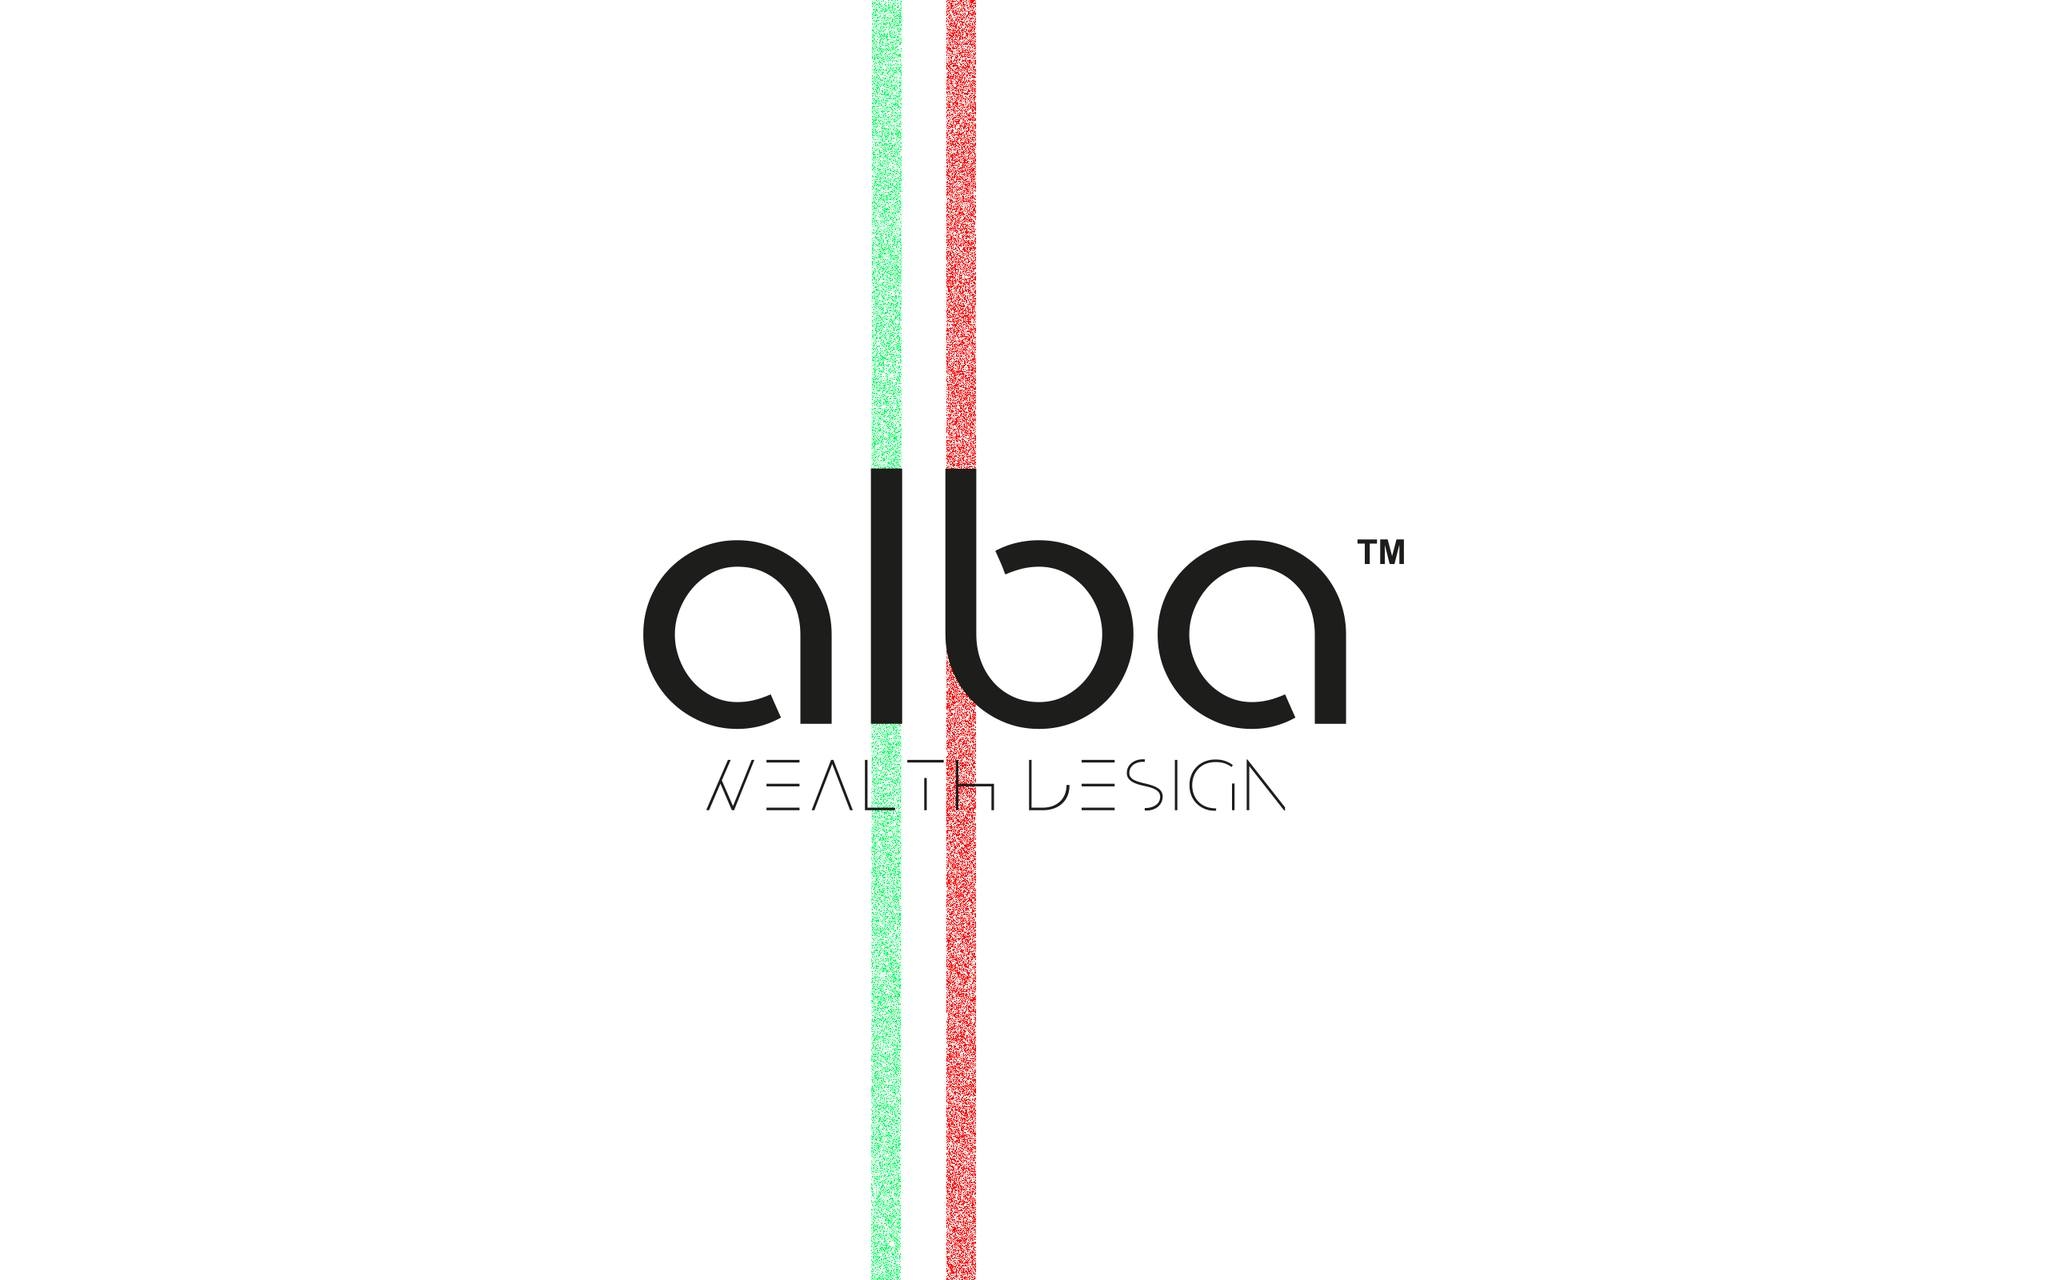 Alba Wealth Design